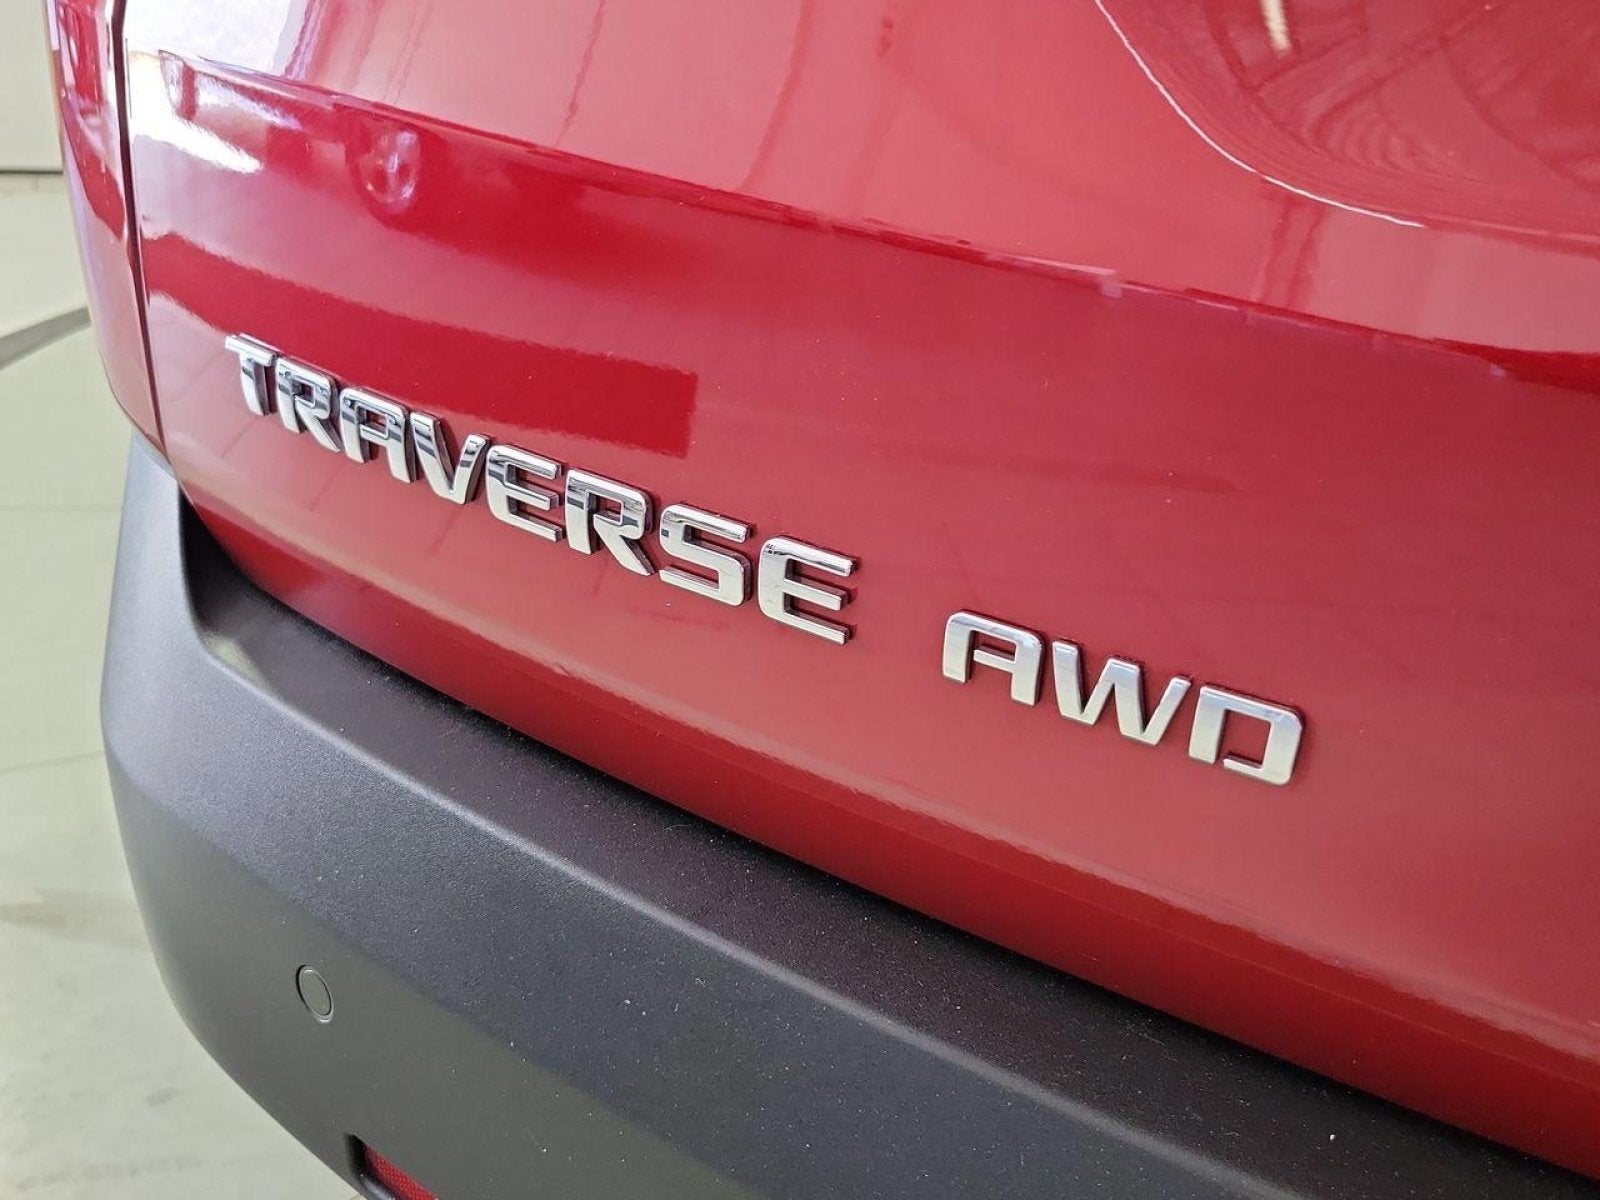 2023 Chevrolet Traverse LT